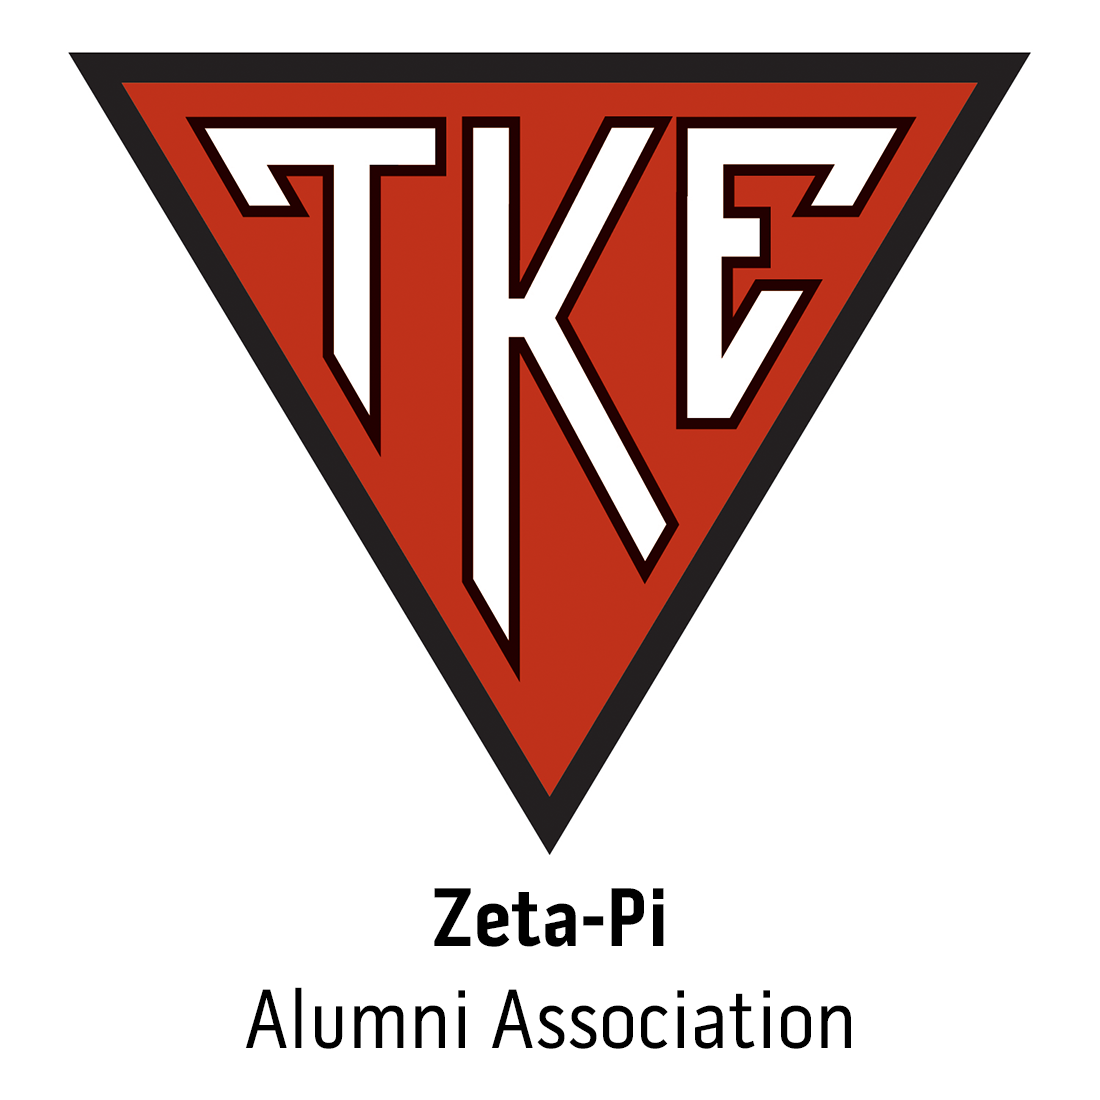 Zeta-Pi Alumni Association at Culver-Stockton College